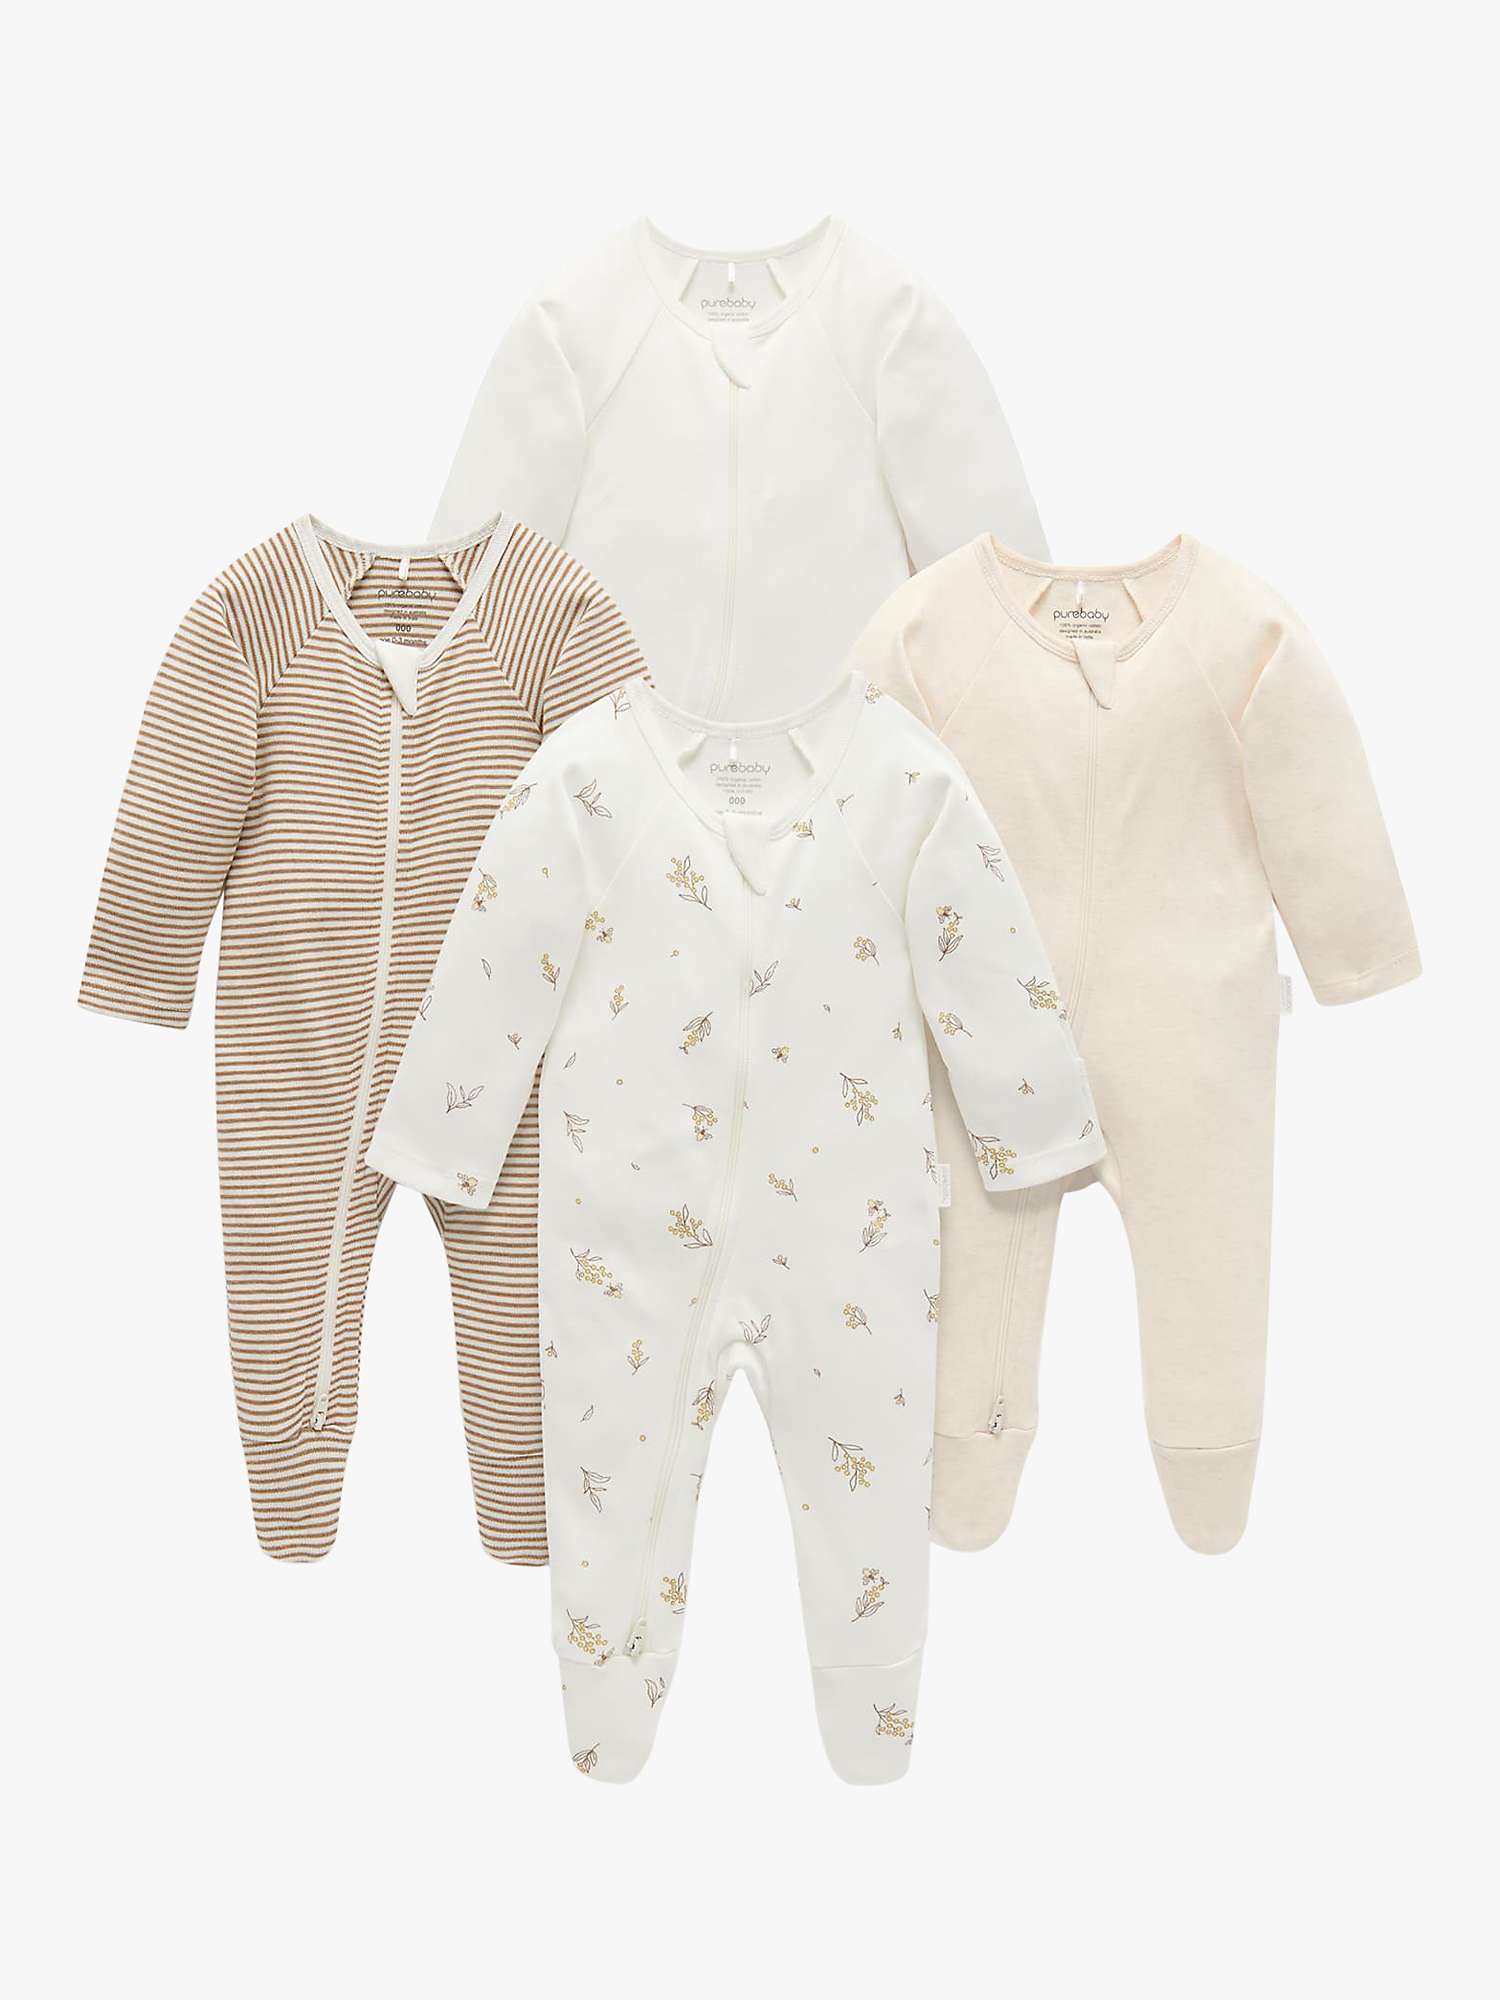 Buy Purebaby Baby Organic Cotton Floral/Stripe/Plain Sleepsuits, Pack of 4, Vanilla Wattlebee Online at johnlewis.com